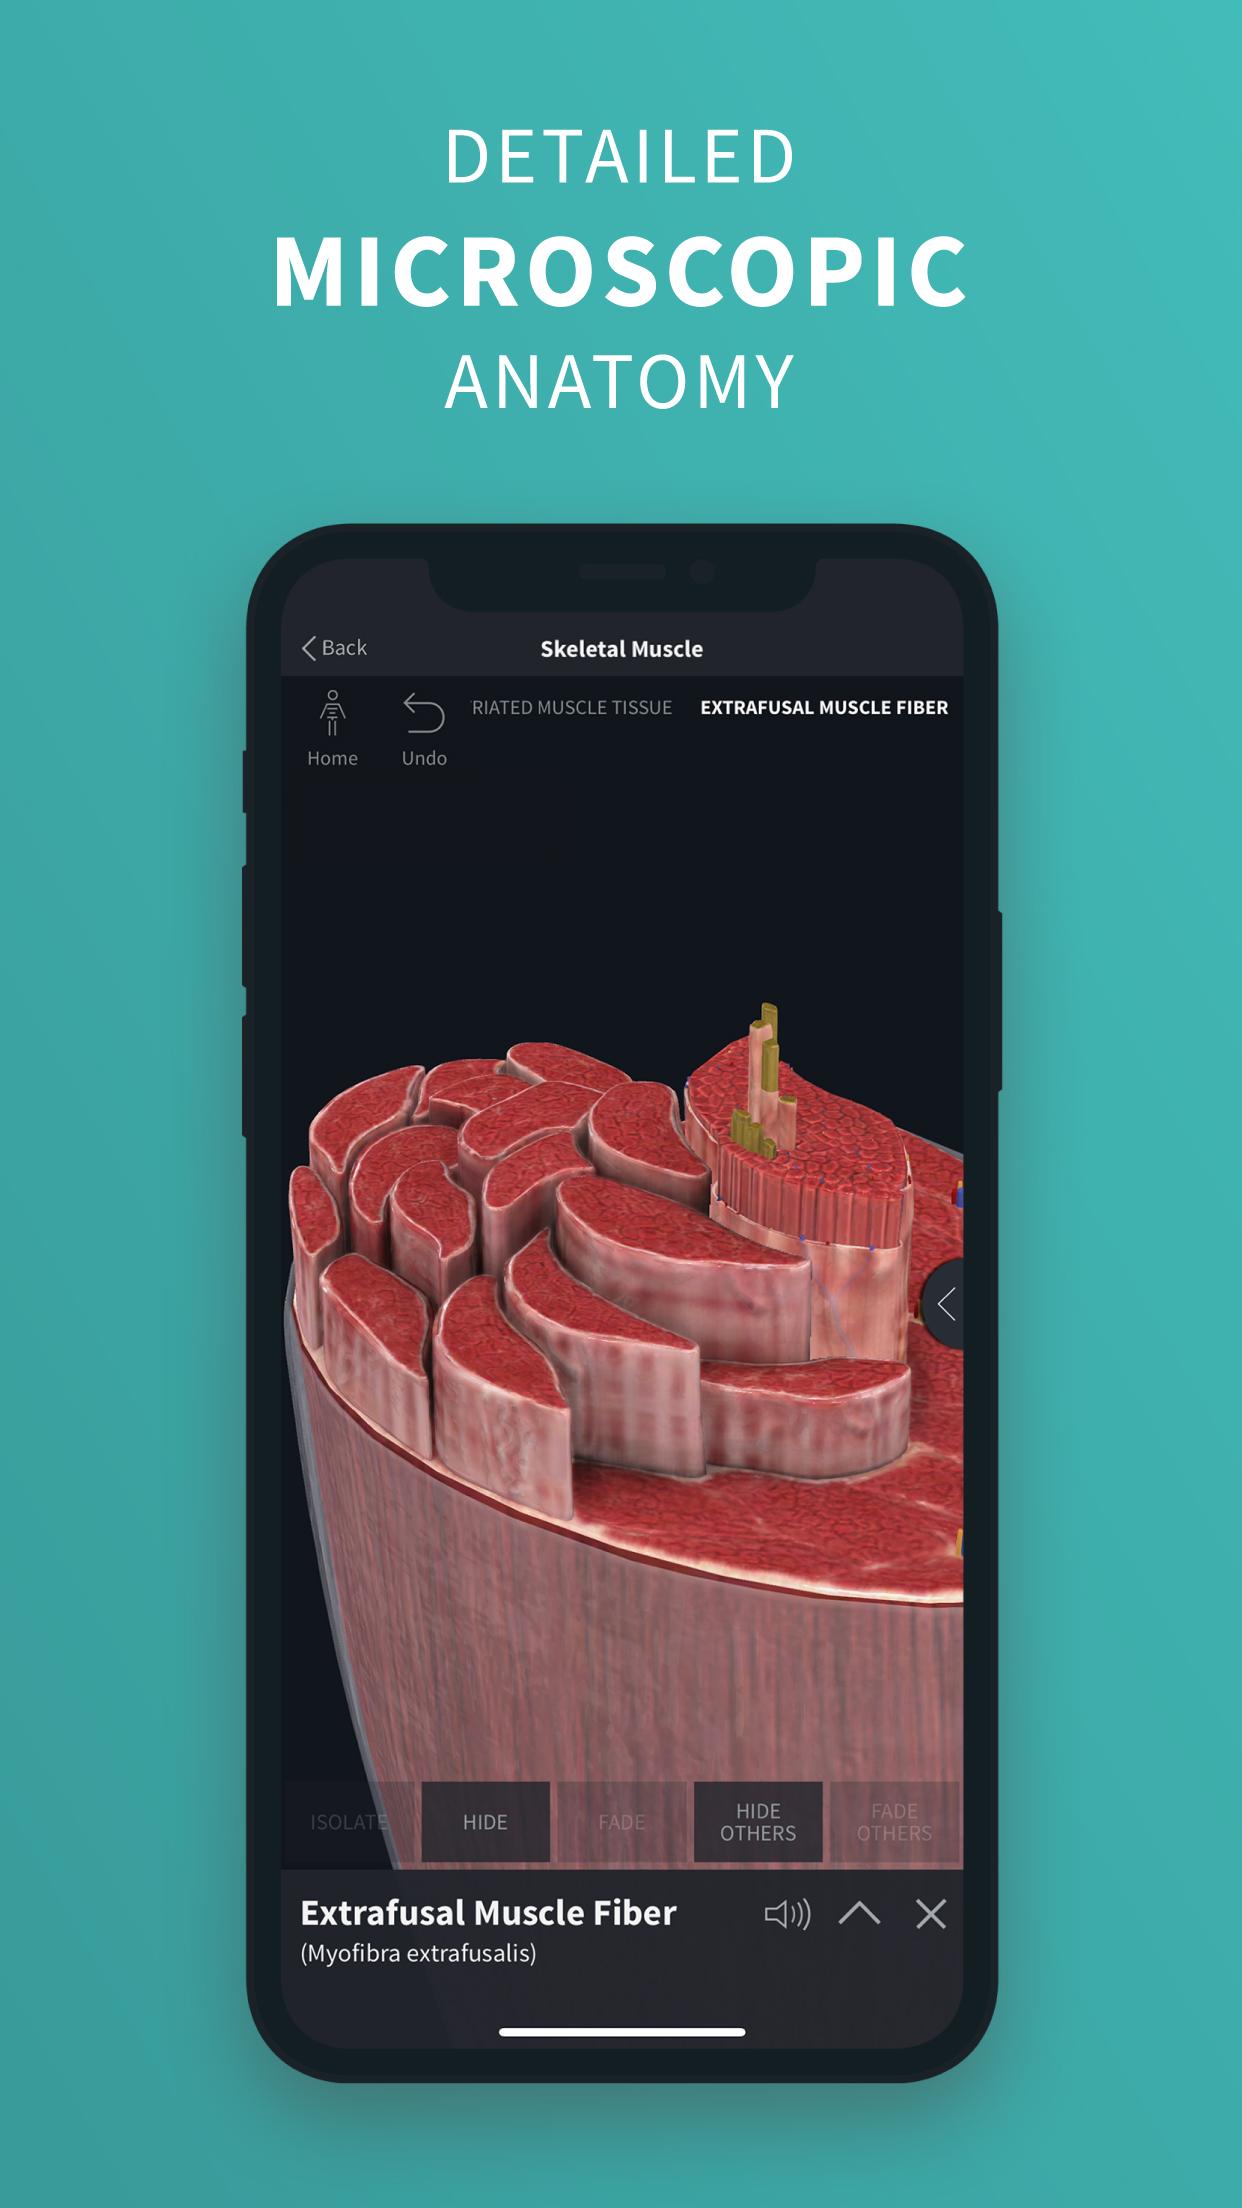 Complete Anatomy ‘21 - 3D Human Body Atlas 6.3.0 Screenshot 4